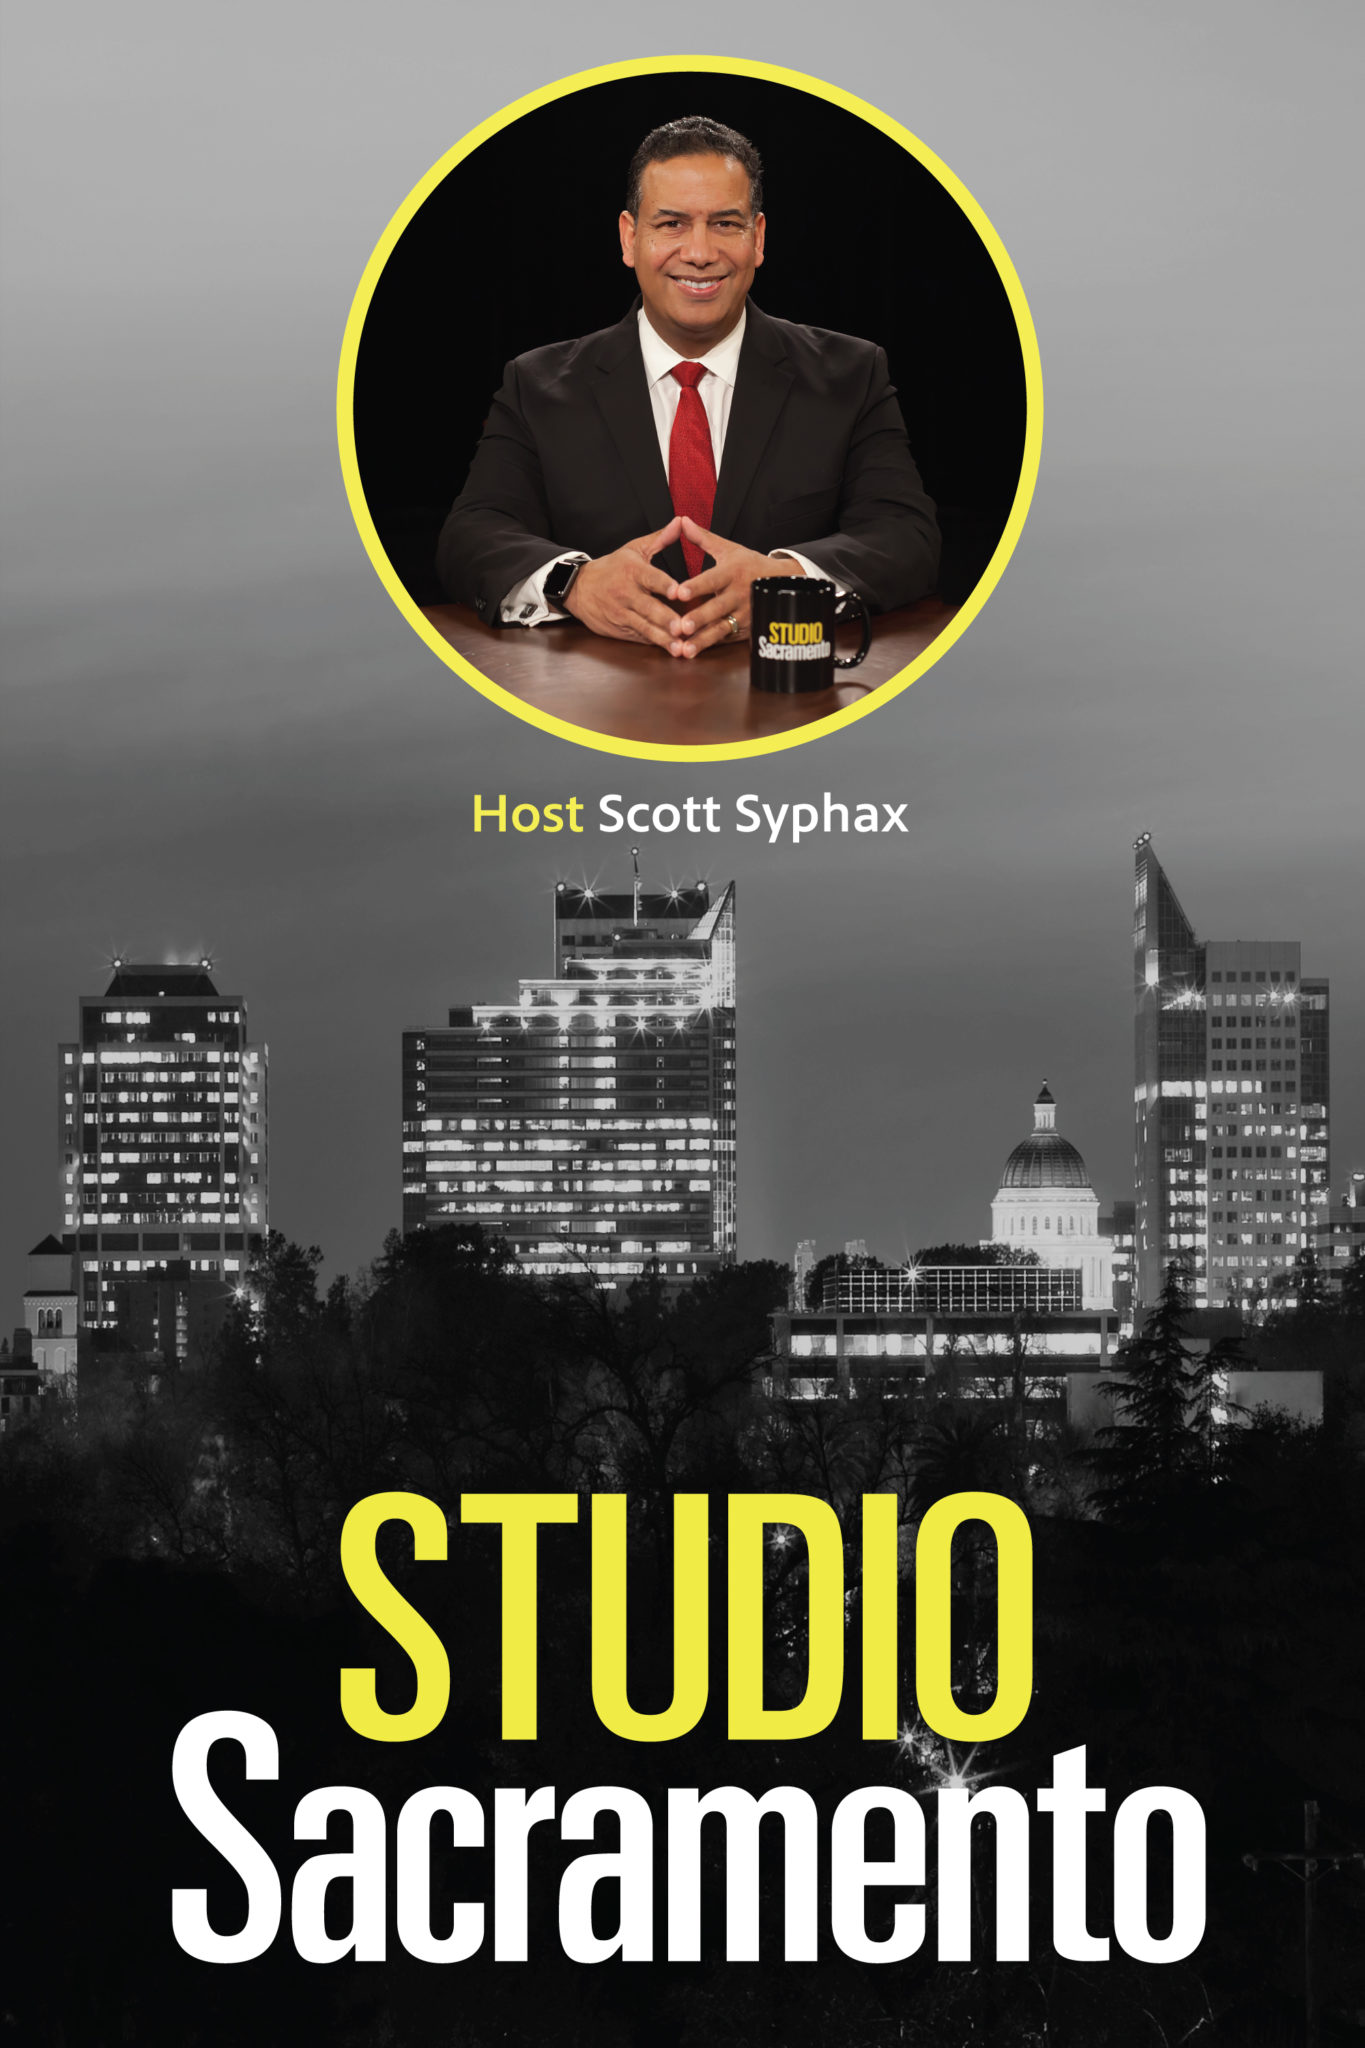 Studio Sacramento logo with Sacramento cityscape in background and host Scott Syphax above